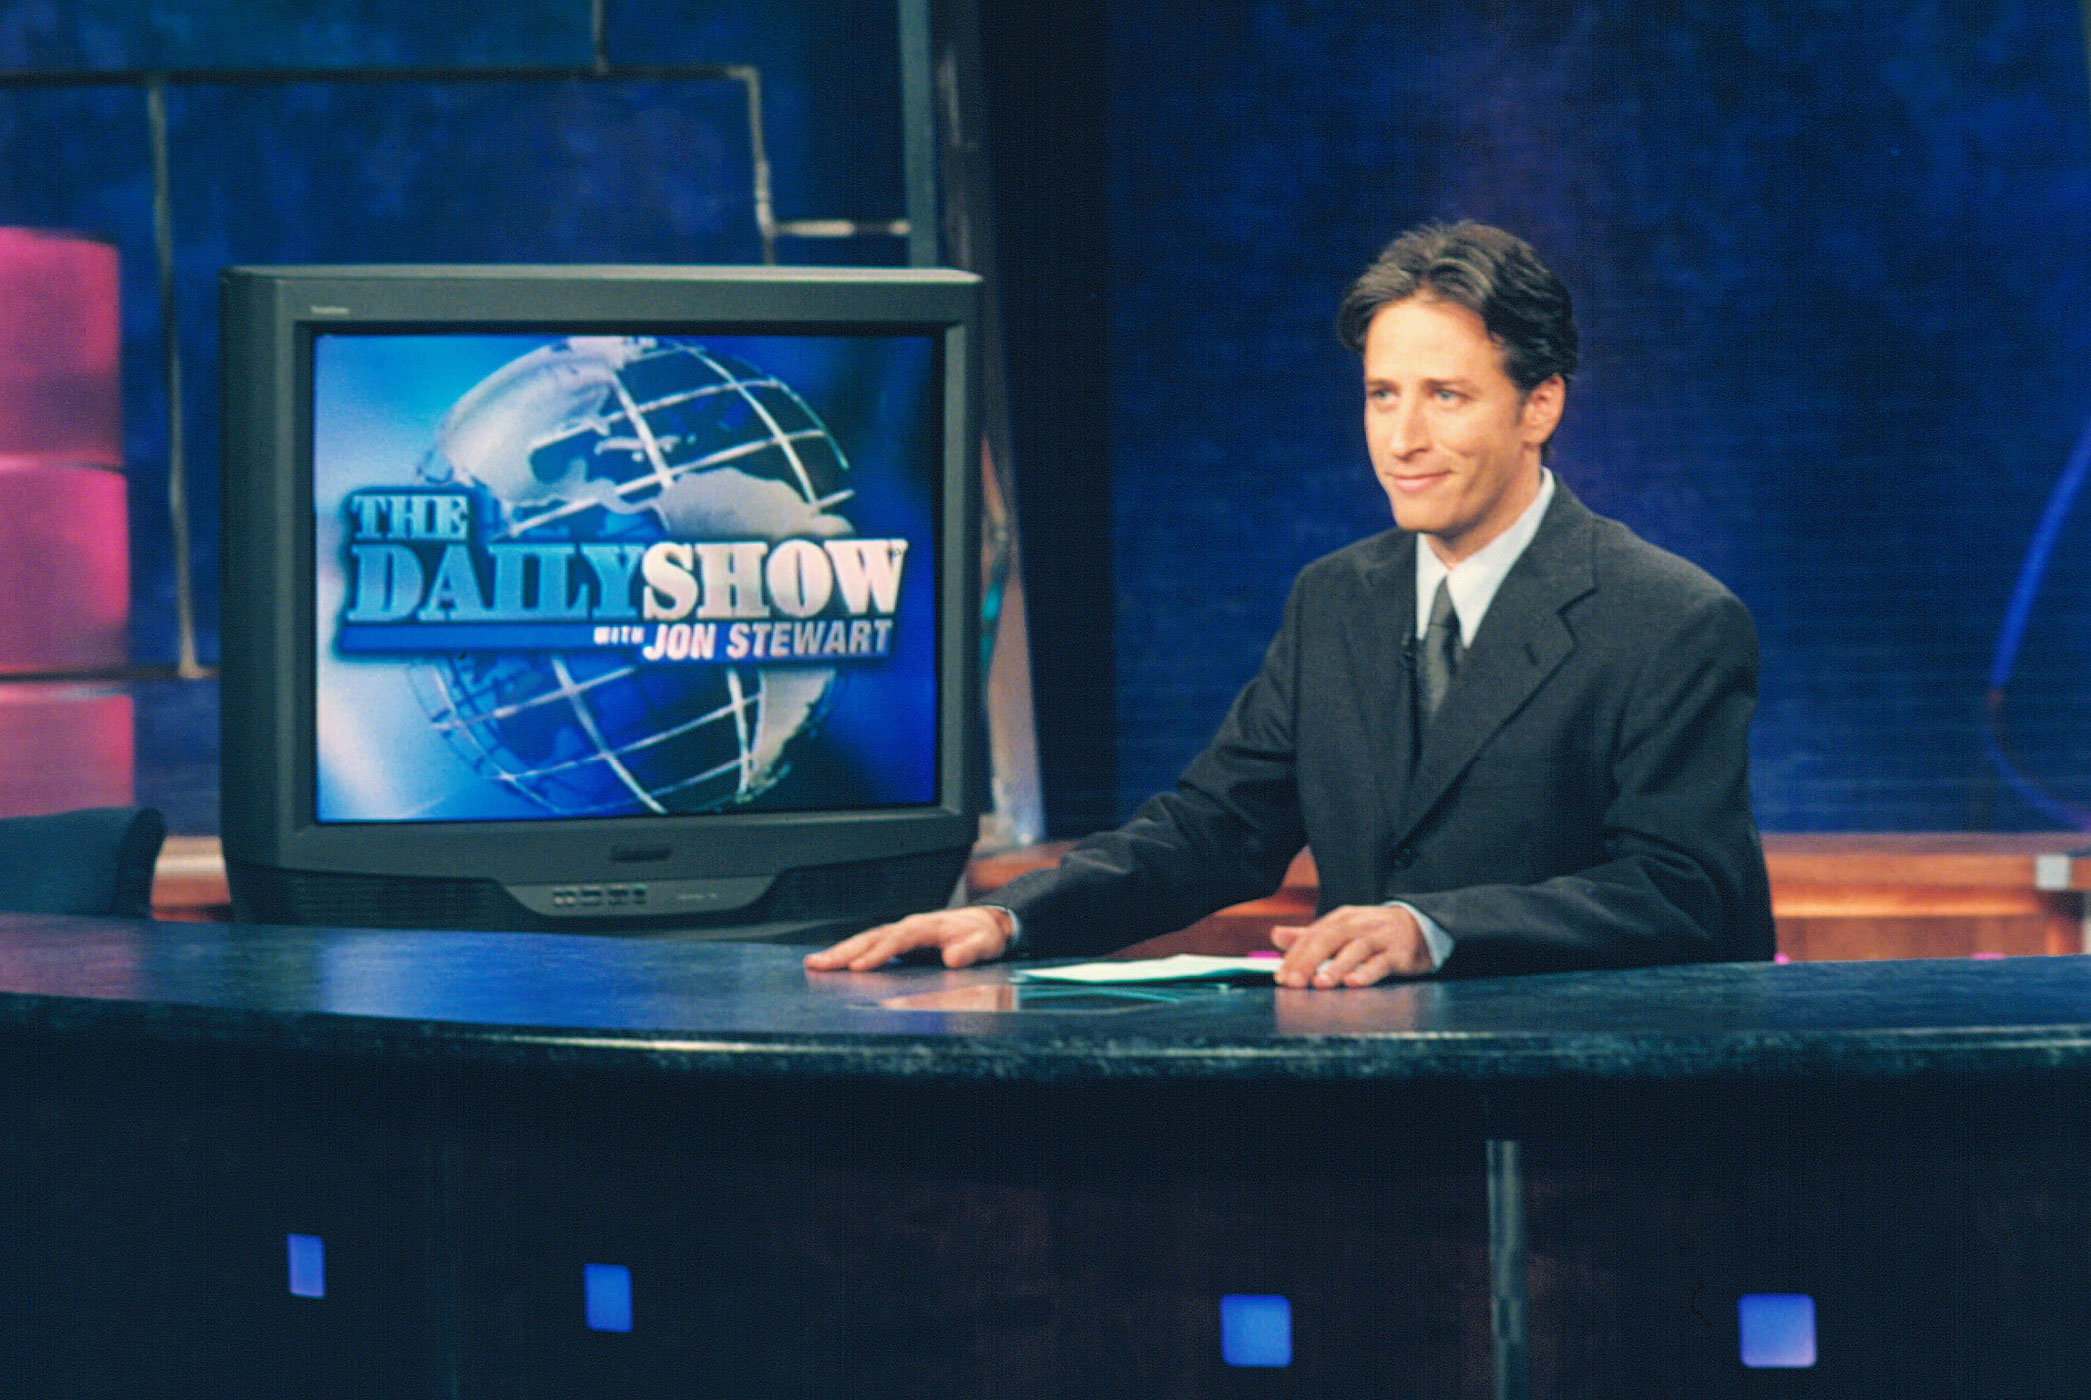 THE DAILY SHOW, 1996-present, Jon Stewart 1999-present